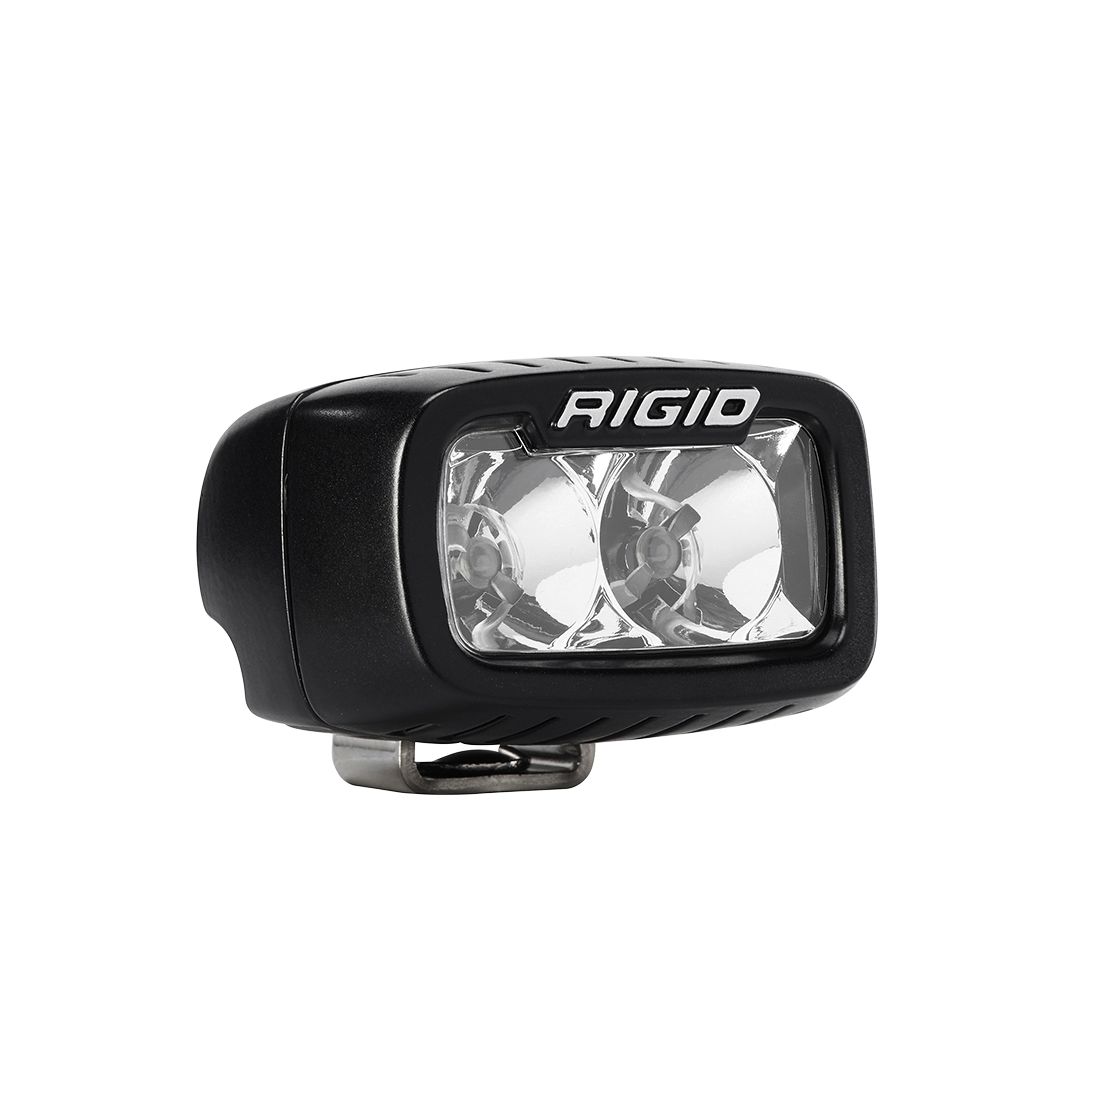 Rigid Industries Flood Light Surface Mount SR-M Pro RIGID Industries 902113